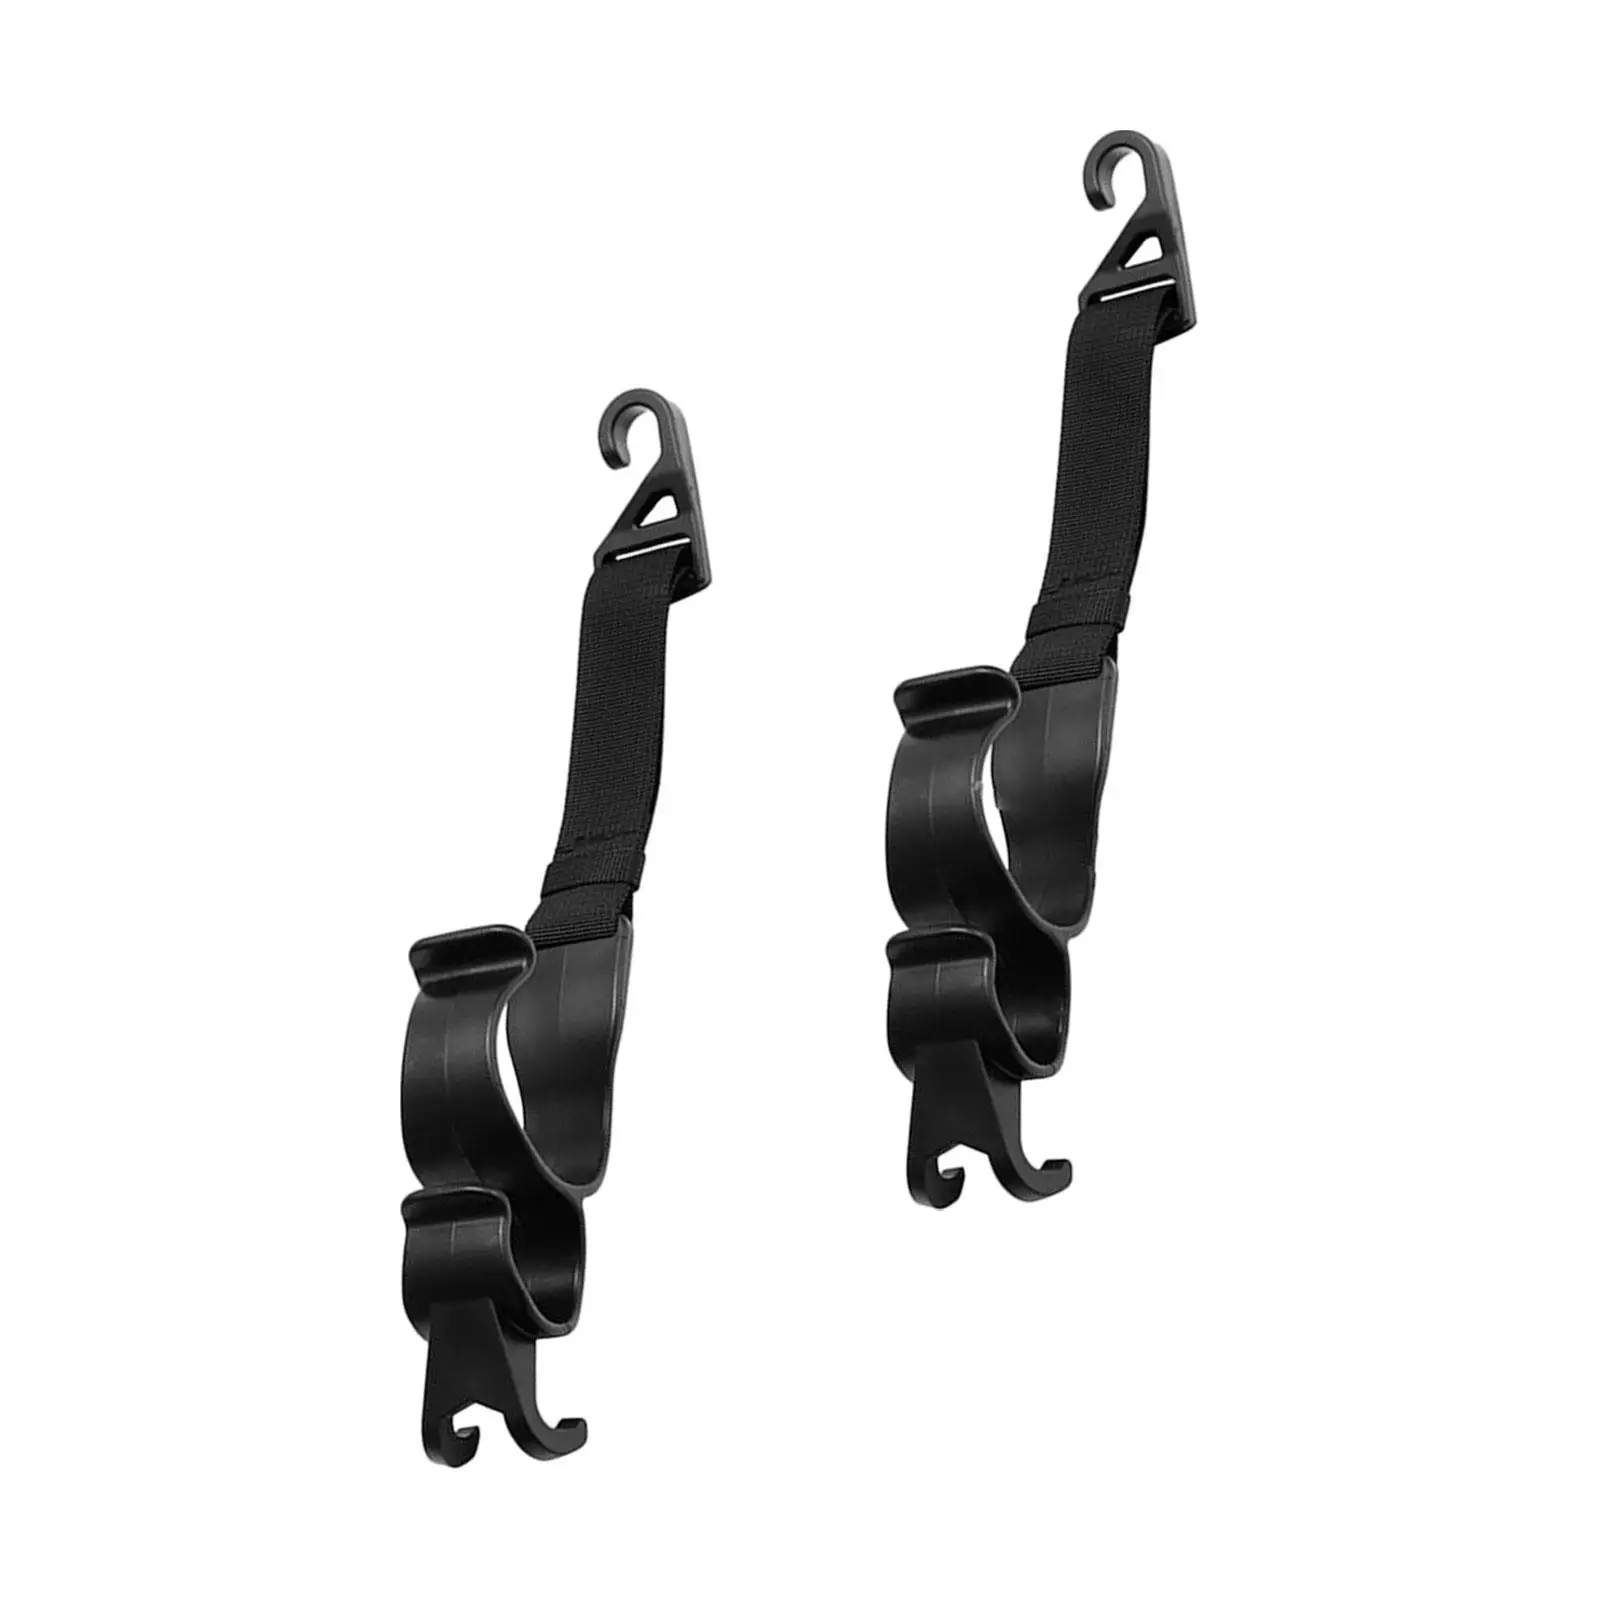 2x Car Headrest Hooks Storage Organizer Headrest Hanger Hook for Grocery Bags